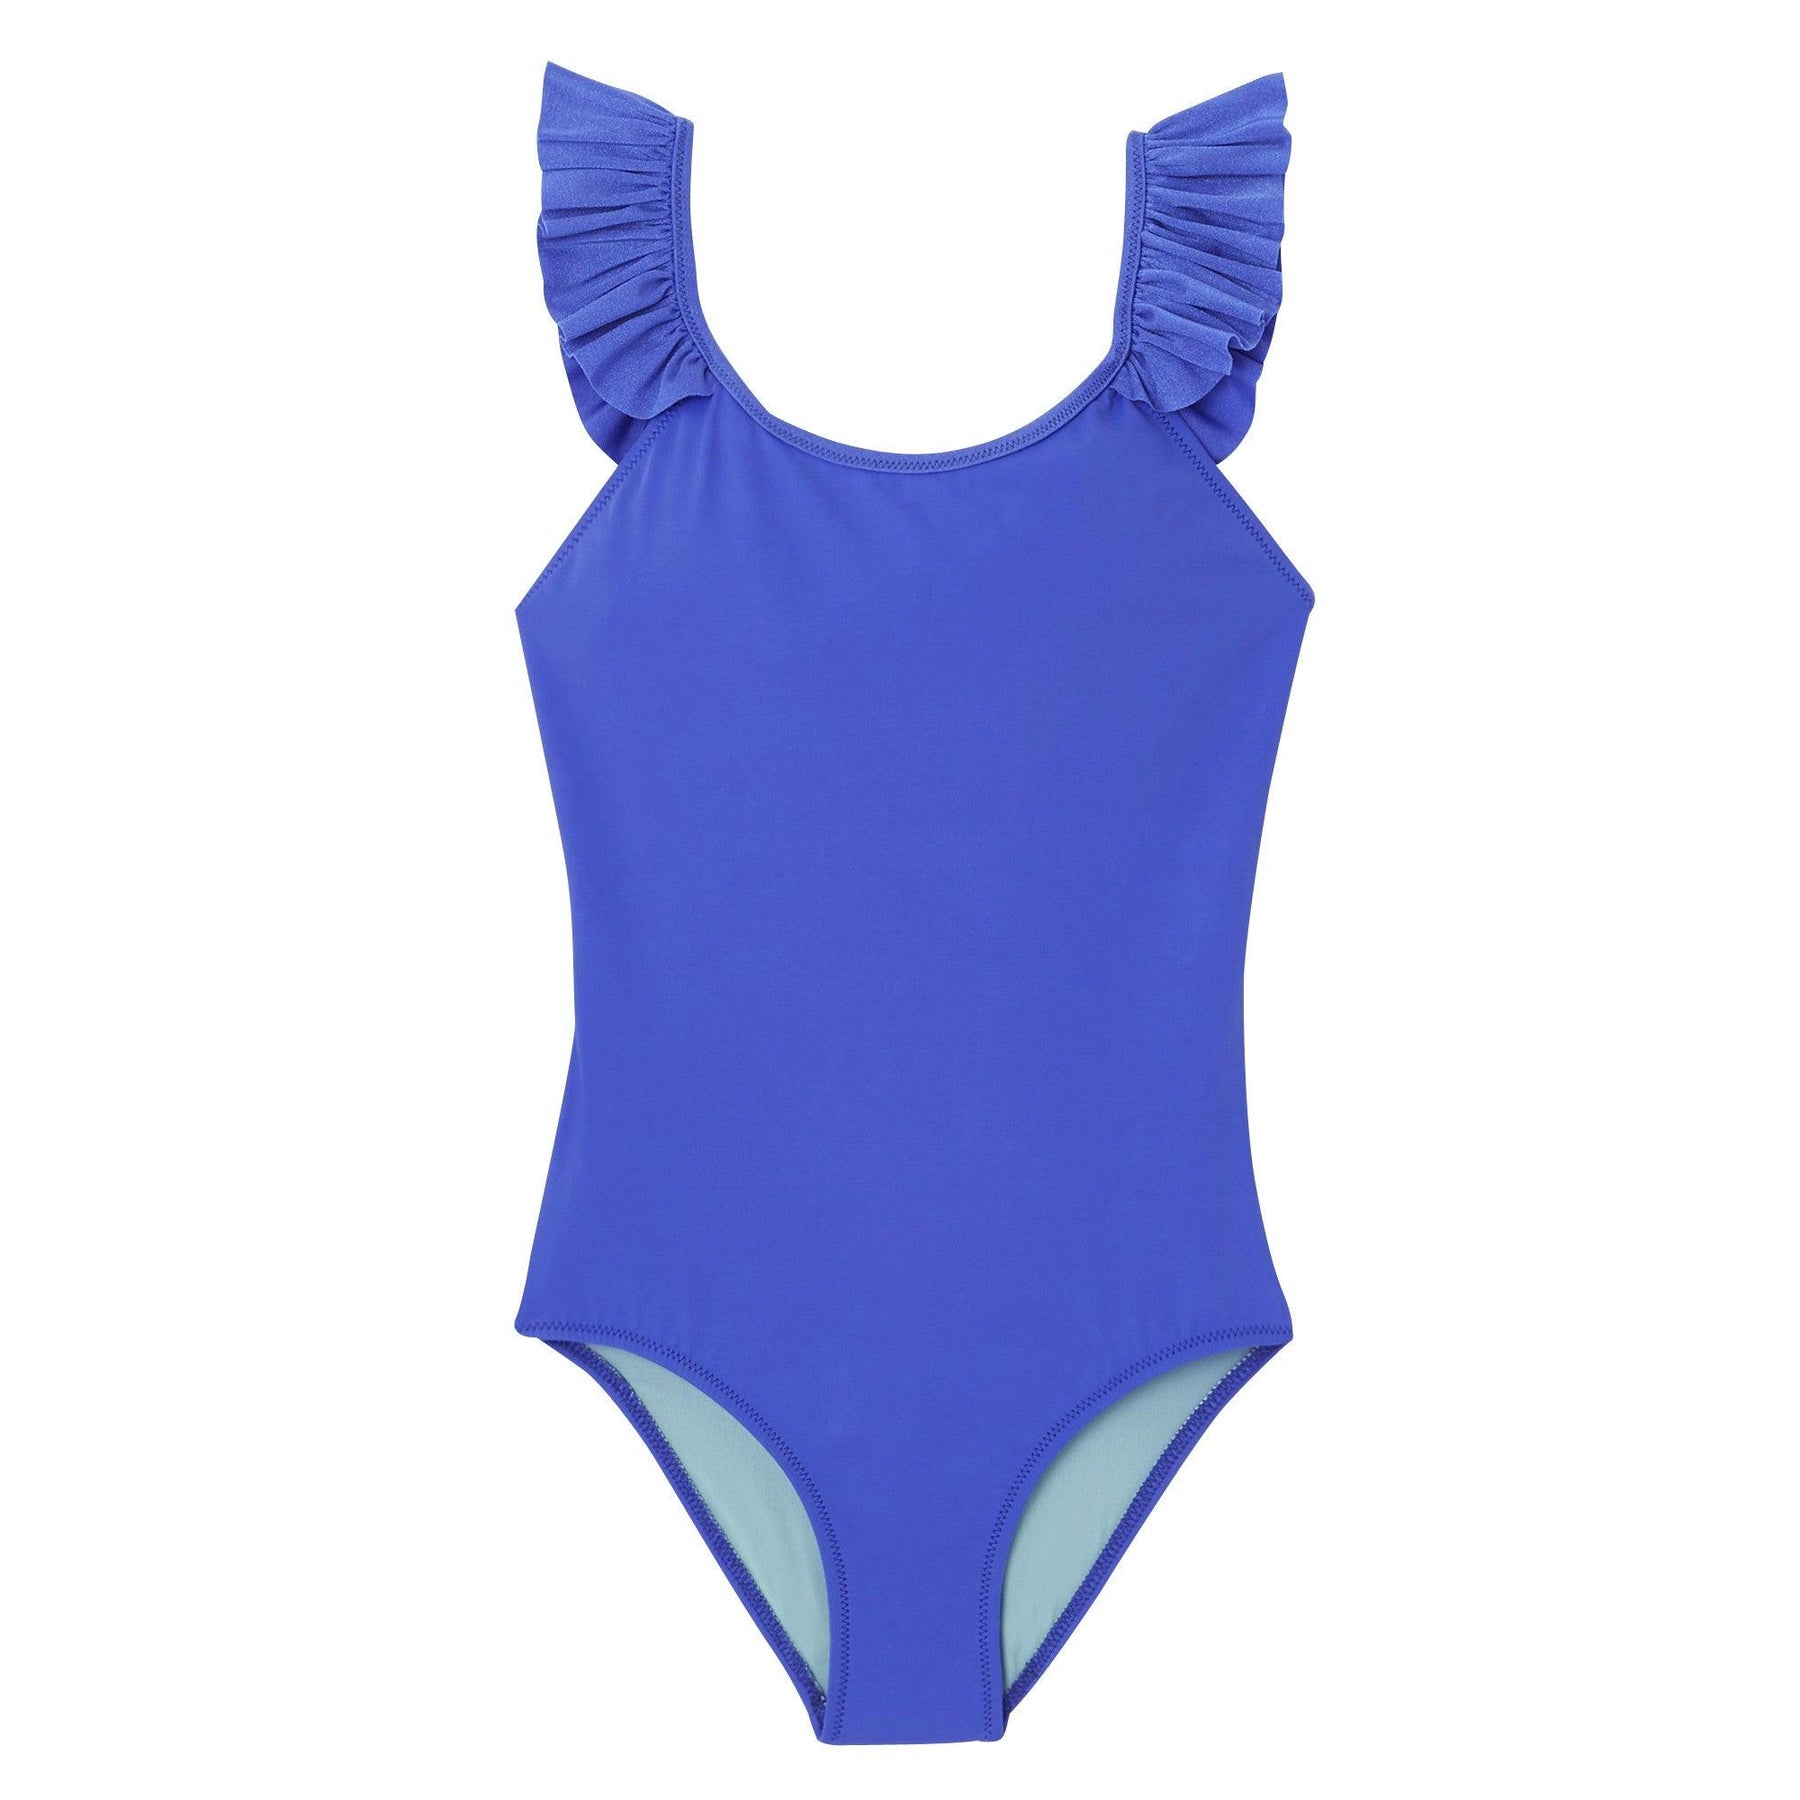 Children's swimsuit, UV protection and eco-friendly swimwear – Lison Paris